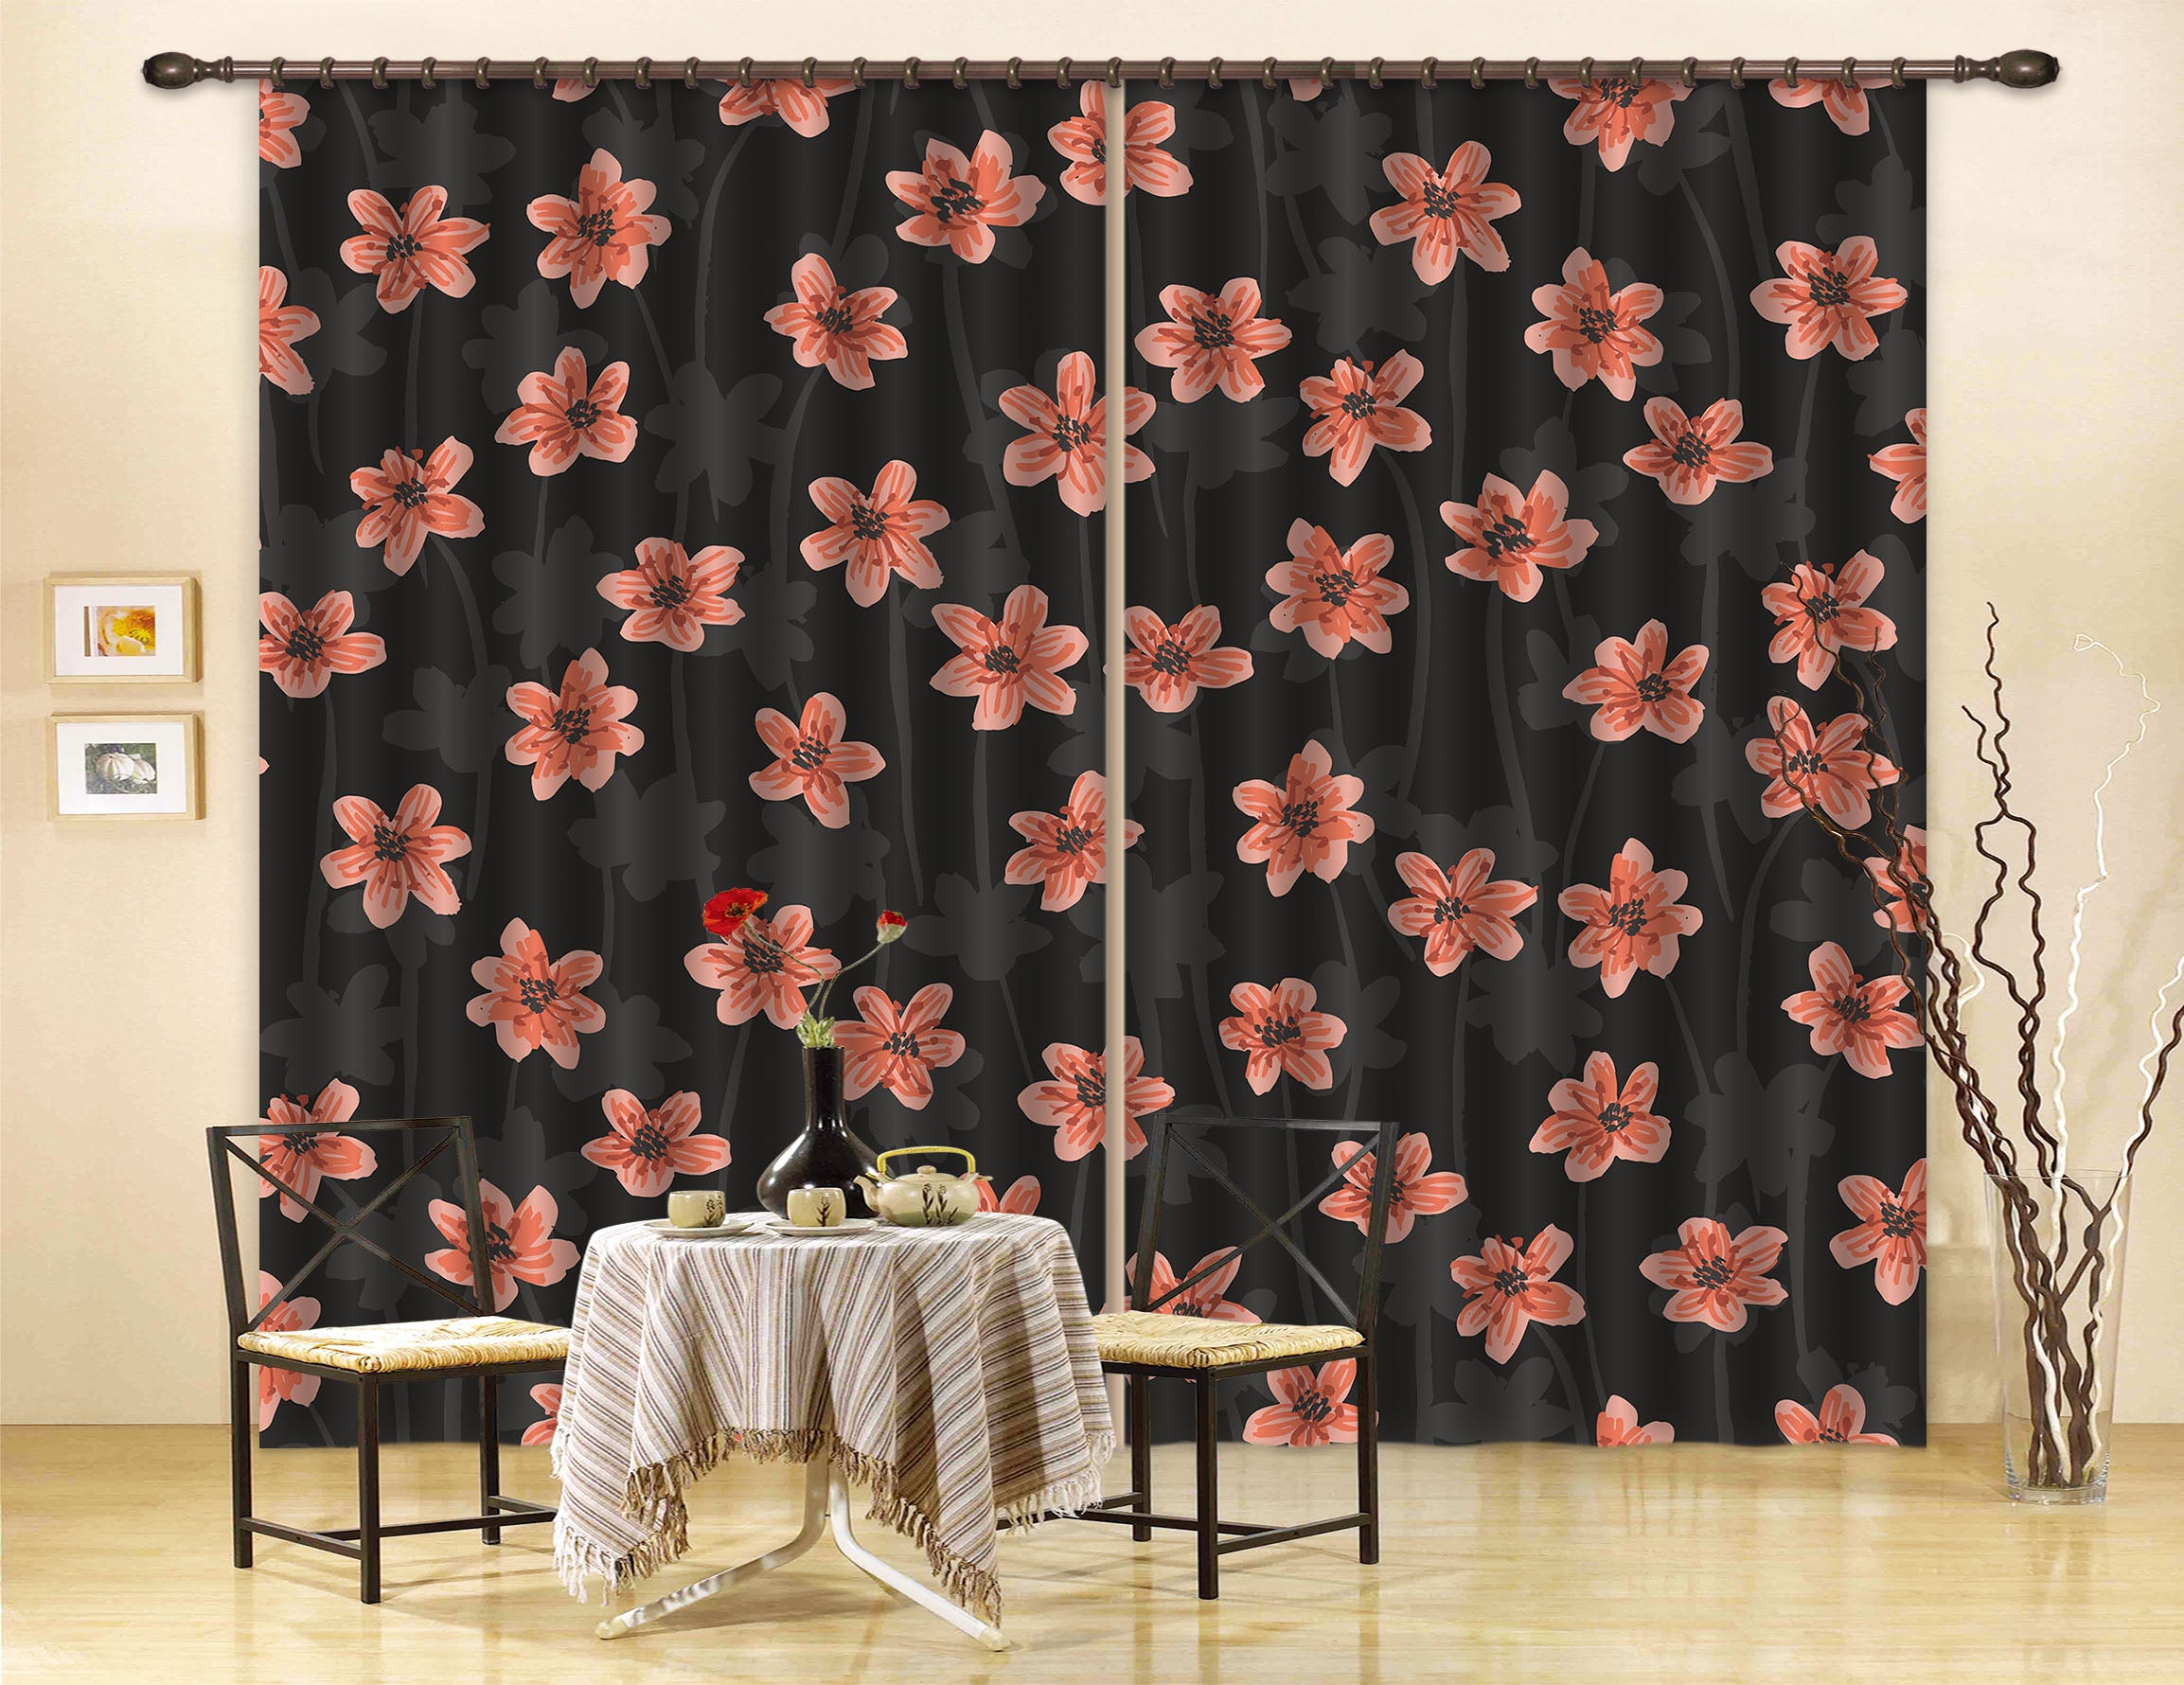 3D Red Flowers Pattern 11169 Kashmira Jayaprakash Curtain Curtains Drapes